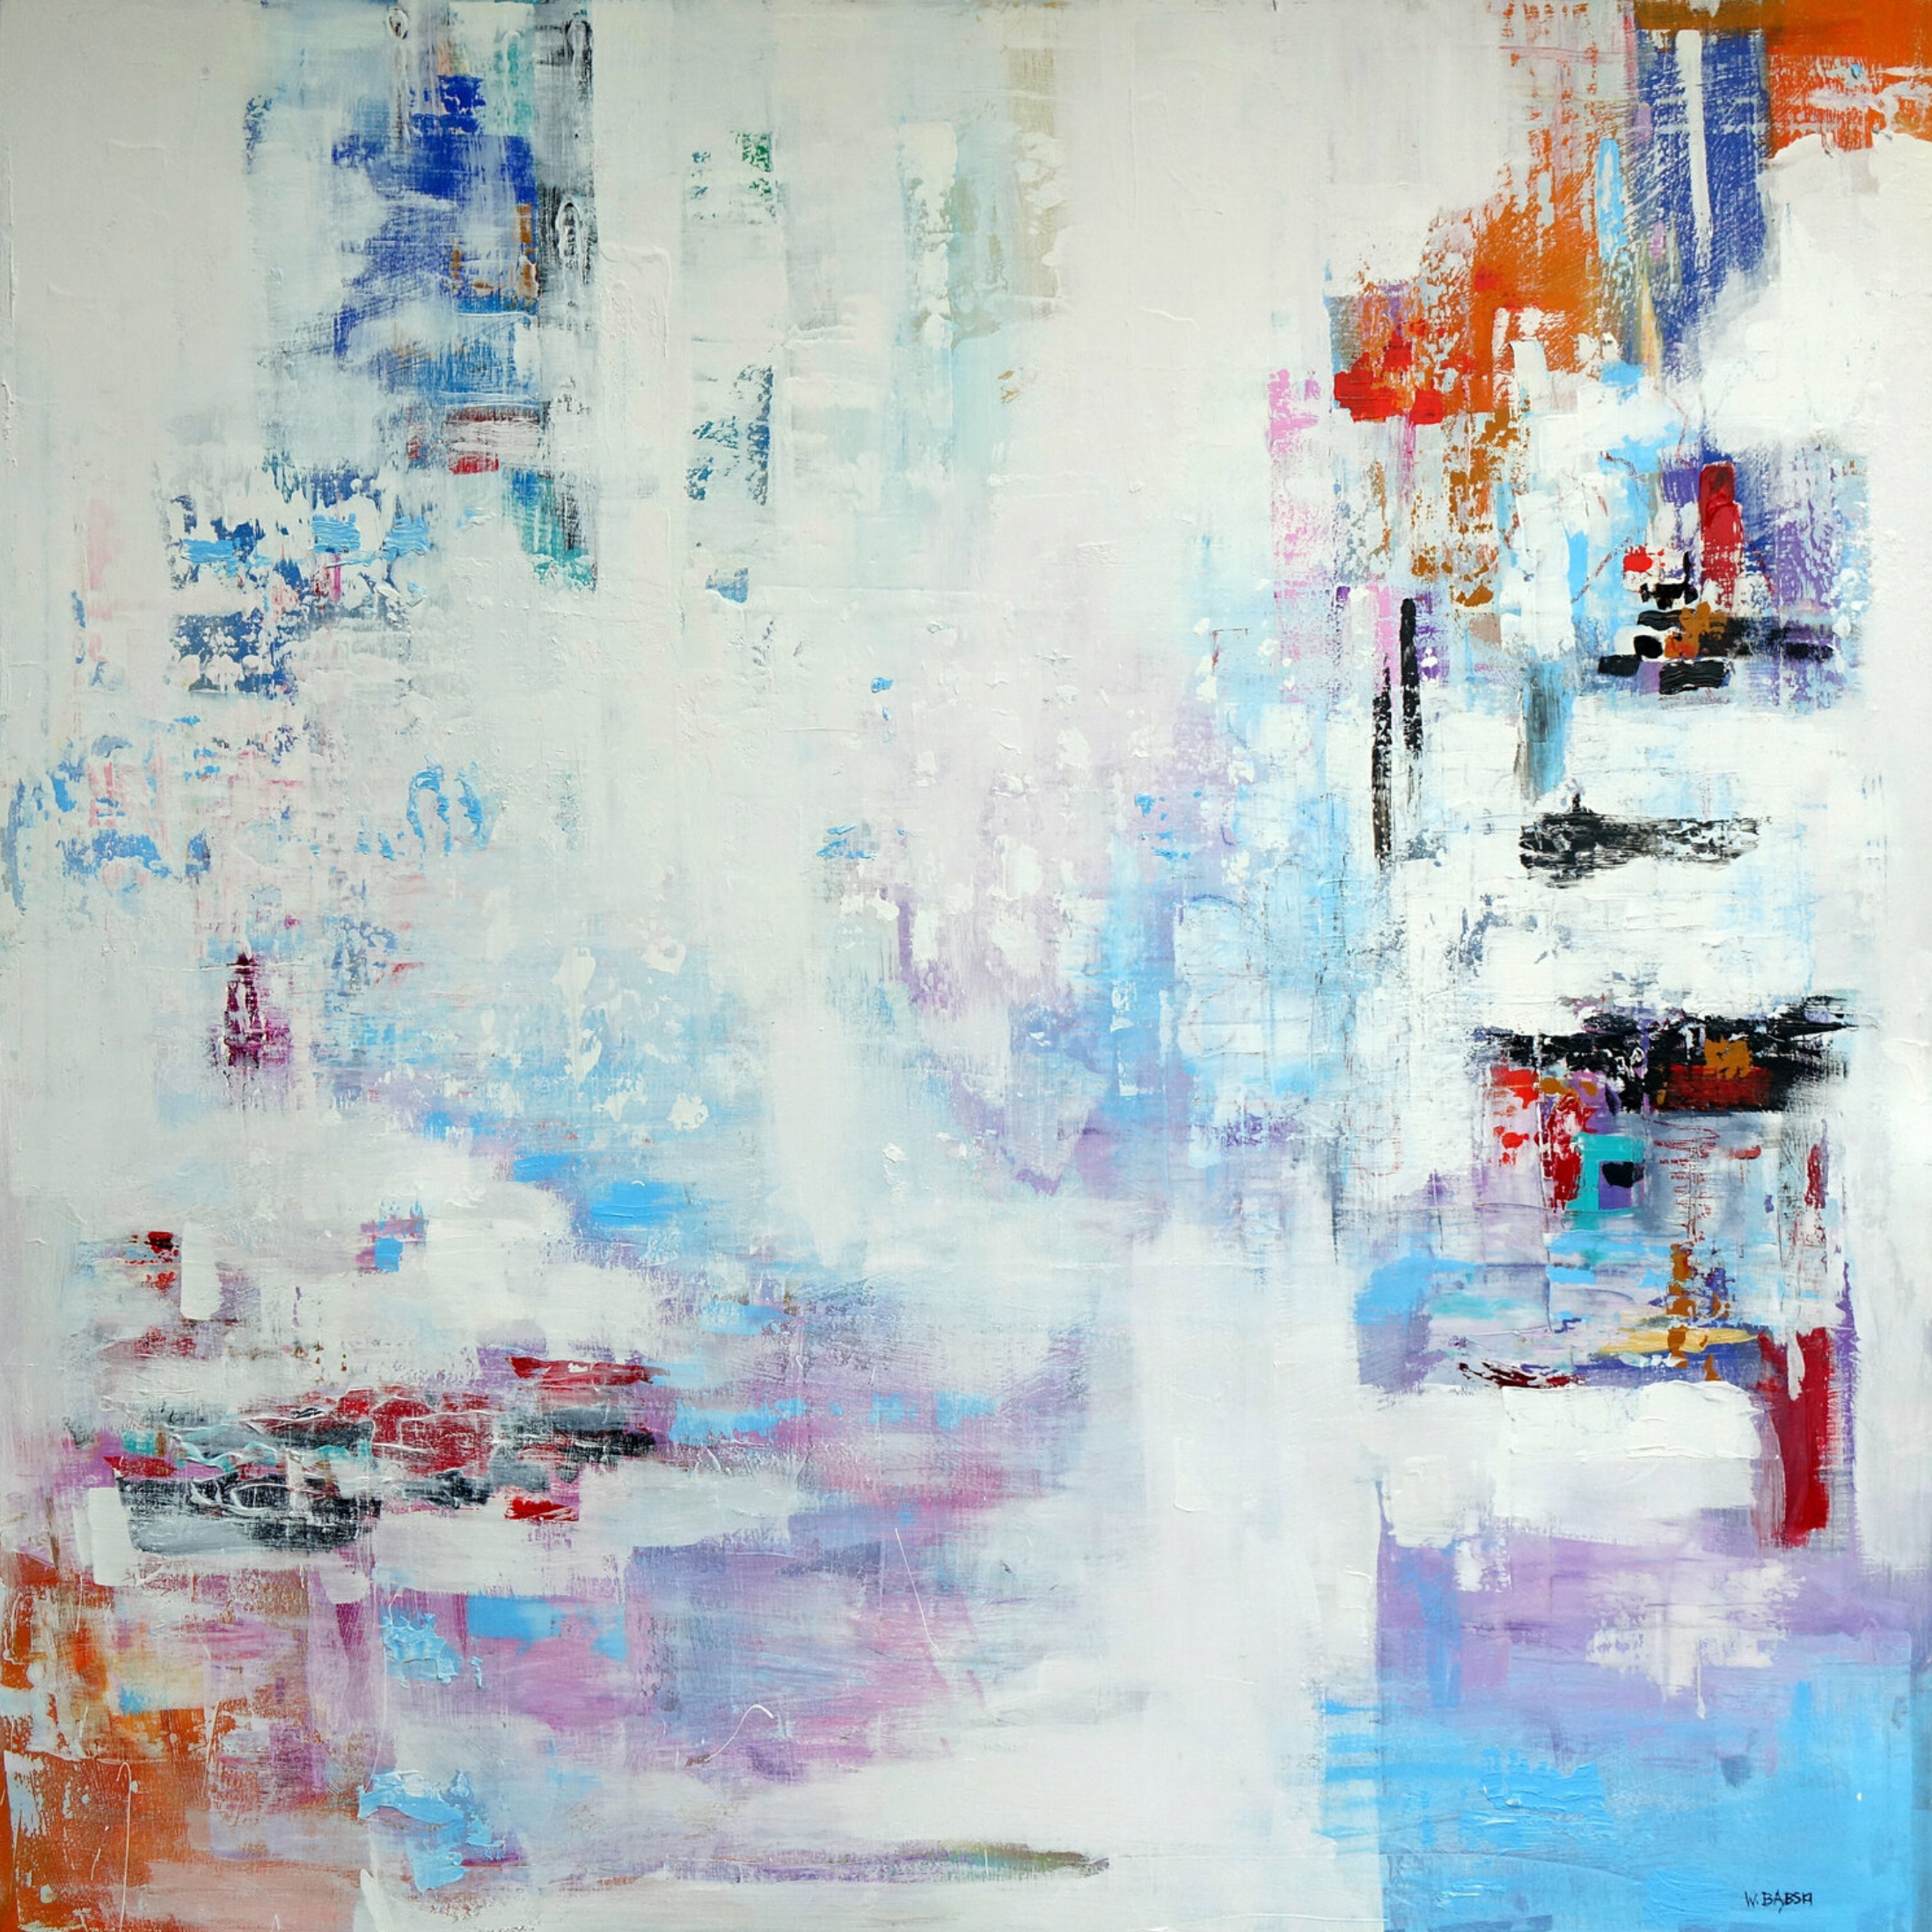 Wojtek Babski, "Abstracto blanco", Pintura abstracta sobre lienzo